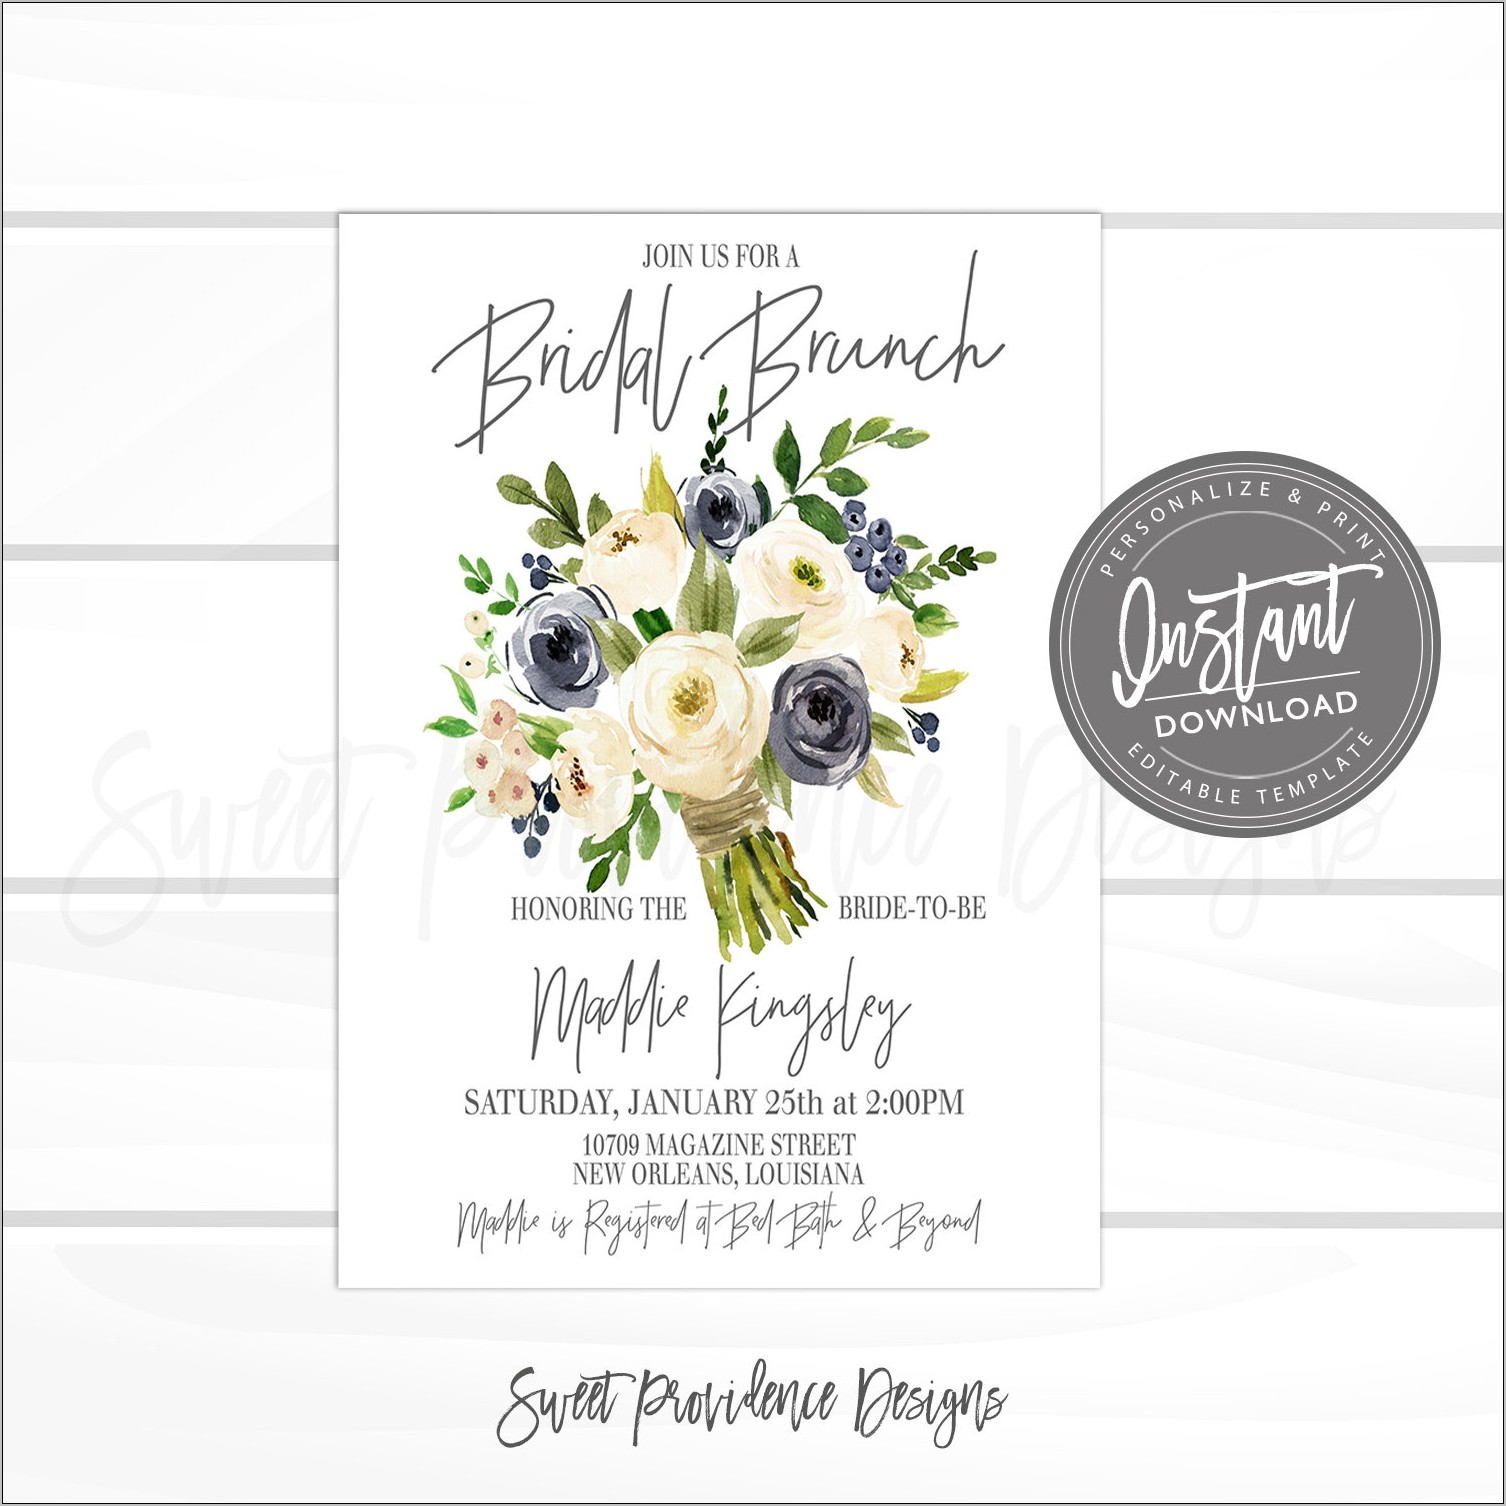 Bridal Brunch Invitation Template